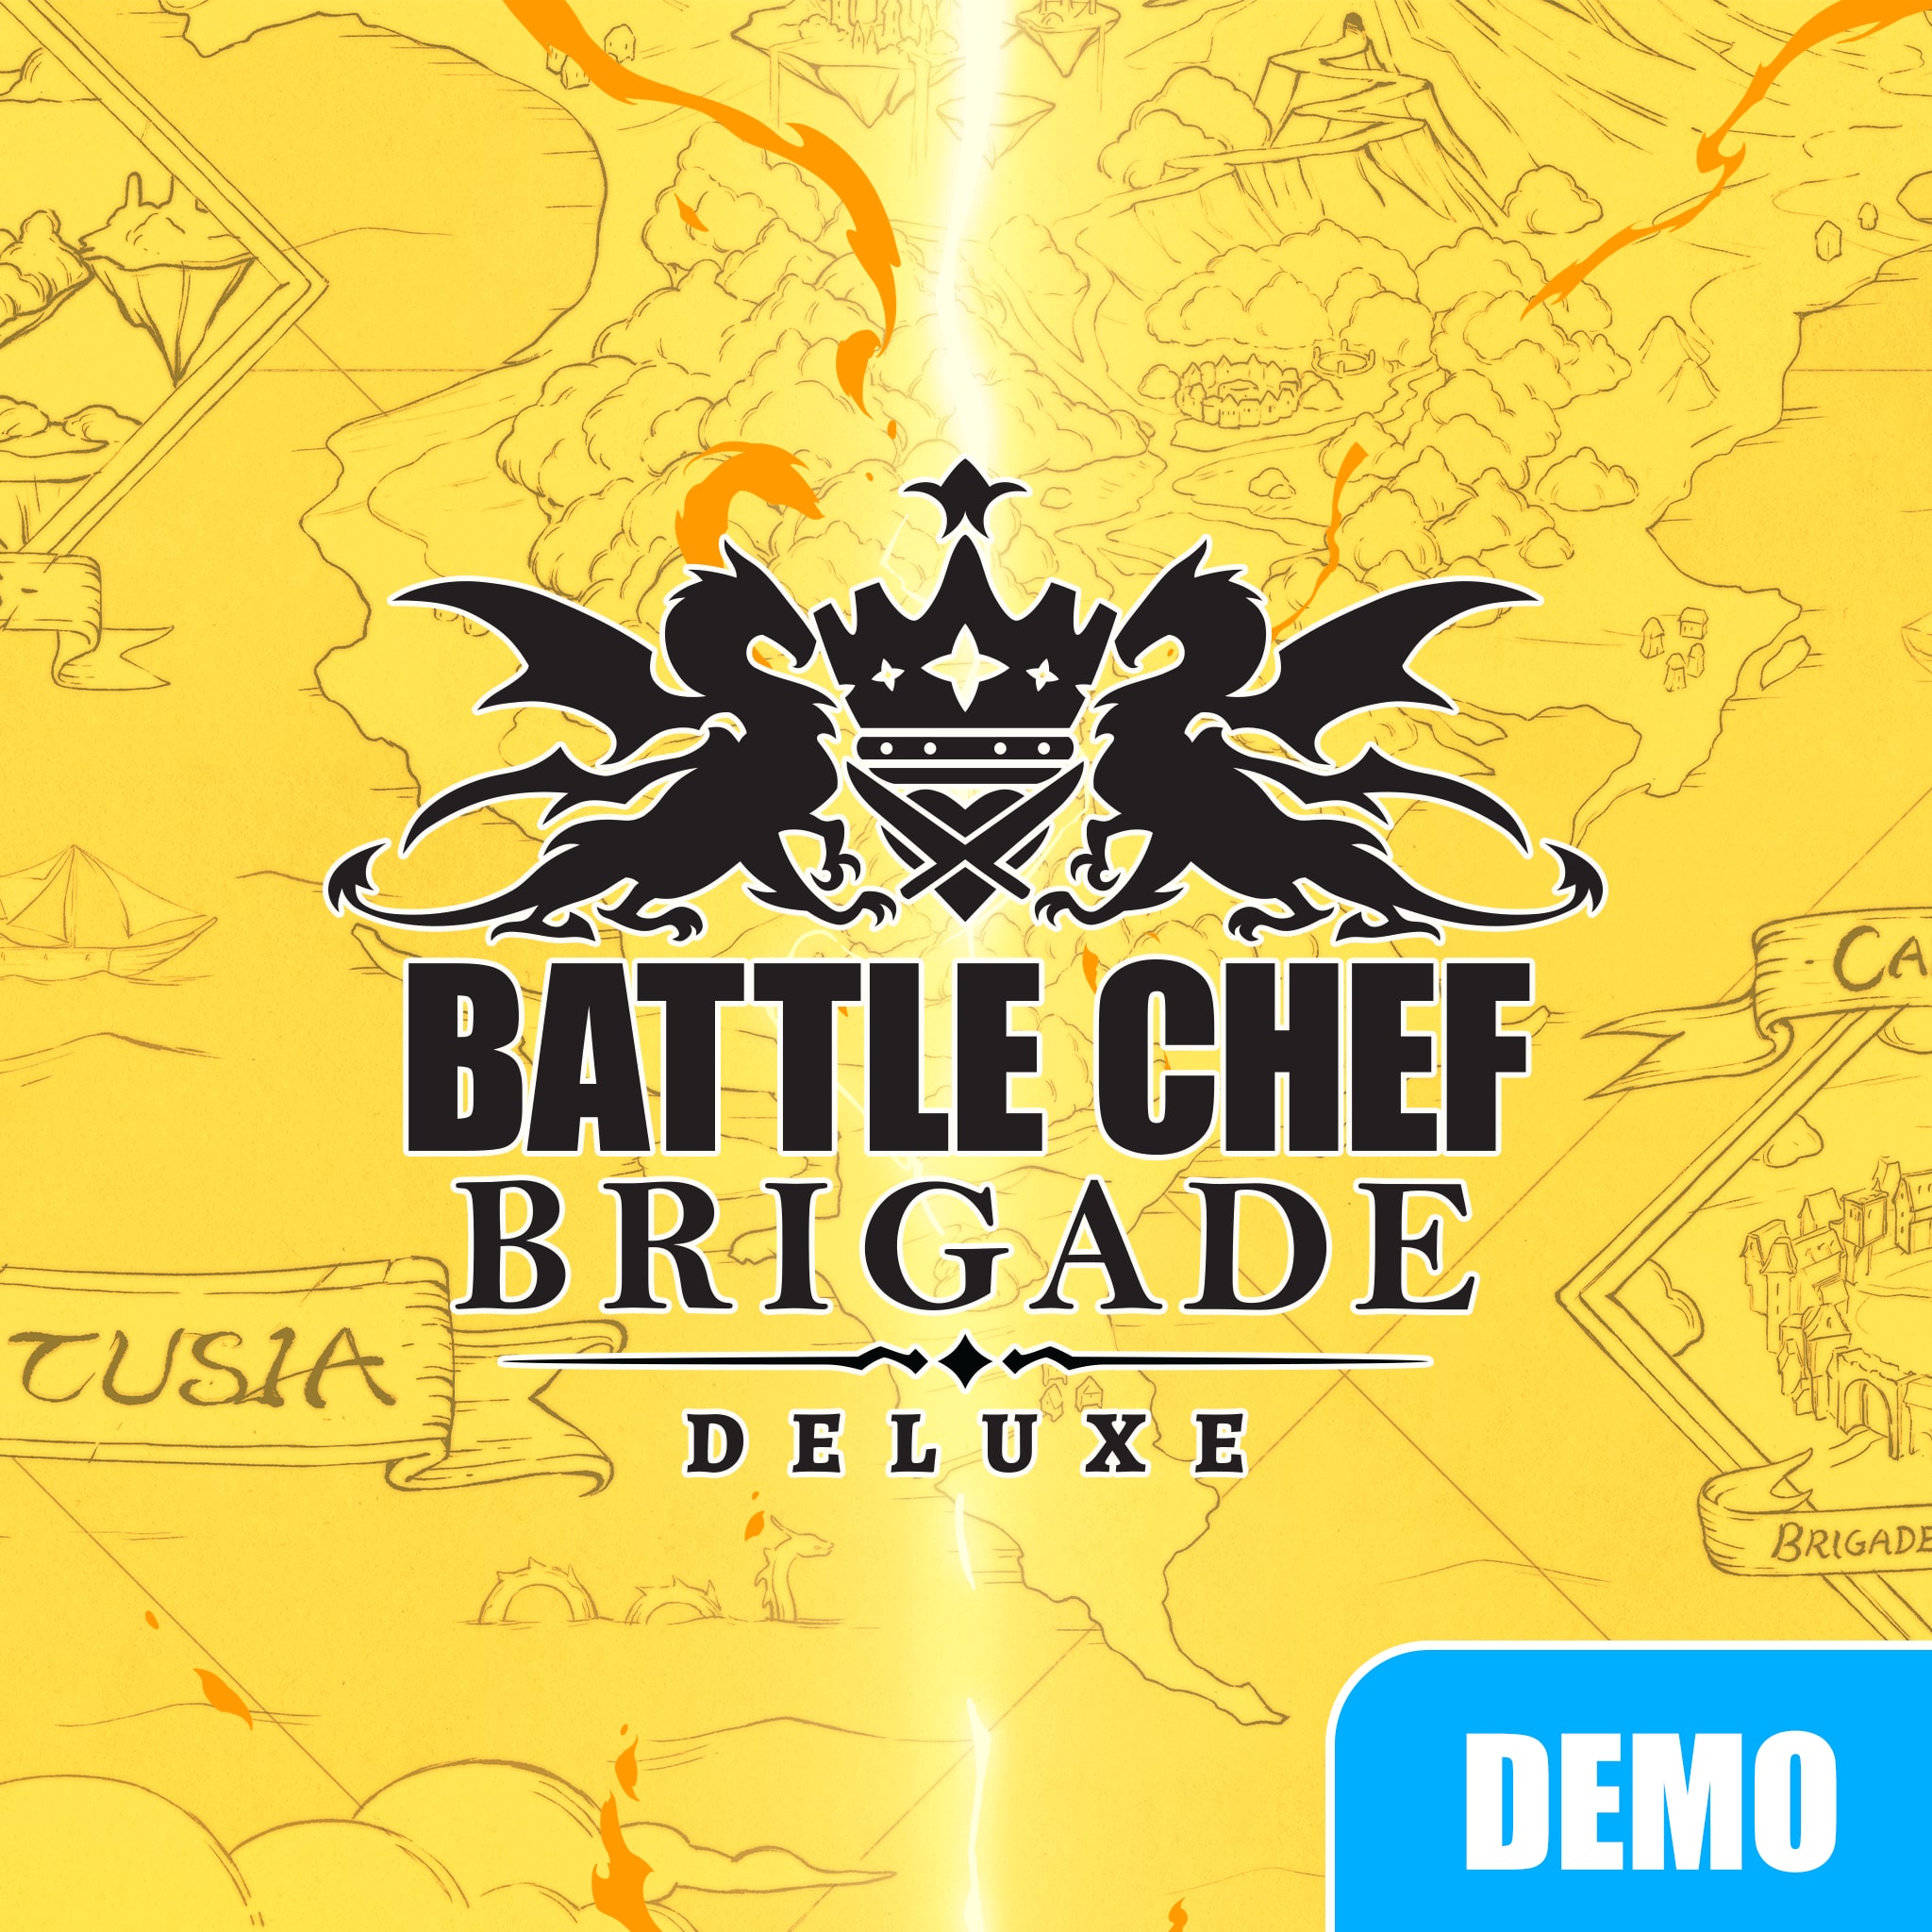 Battle Chef Brigade Deluxe Demo